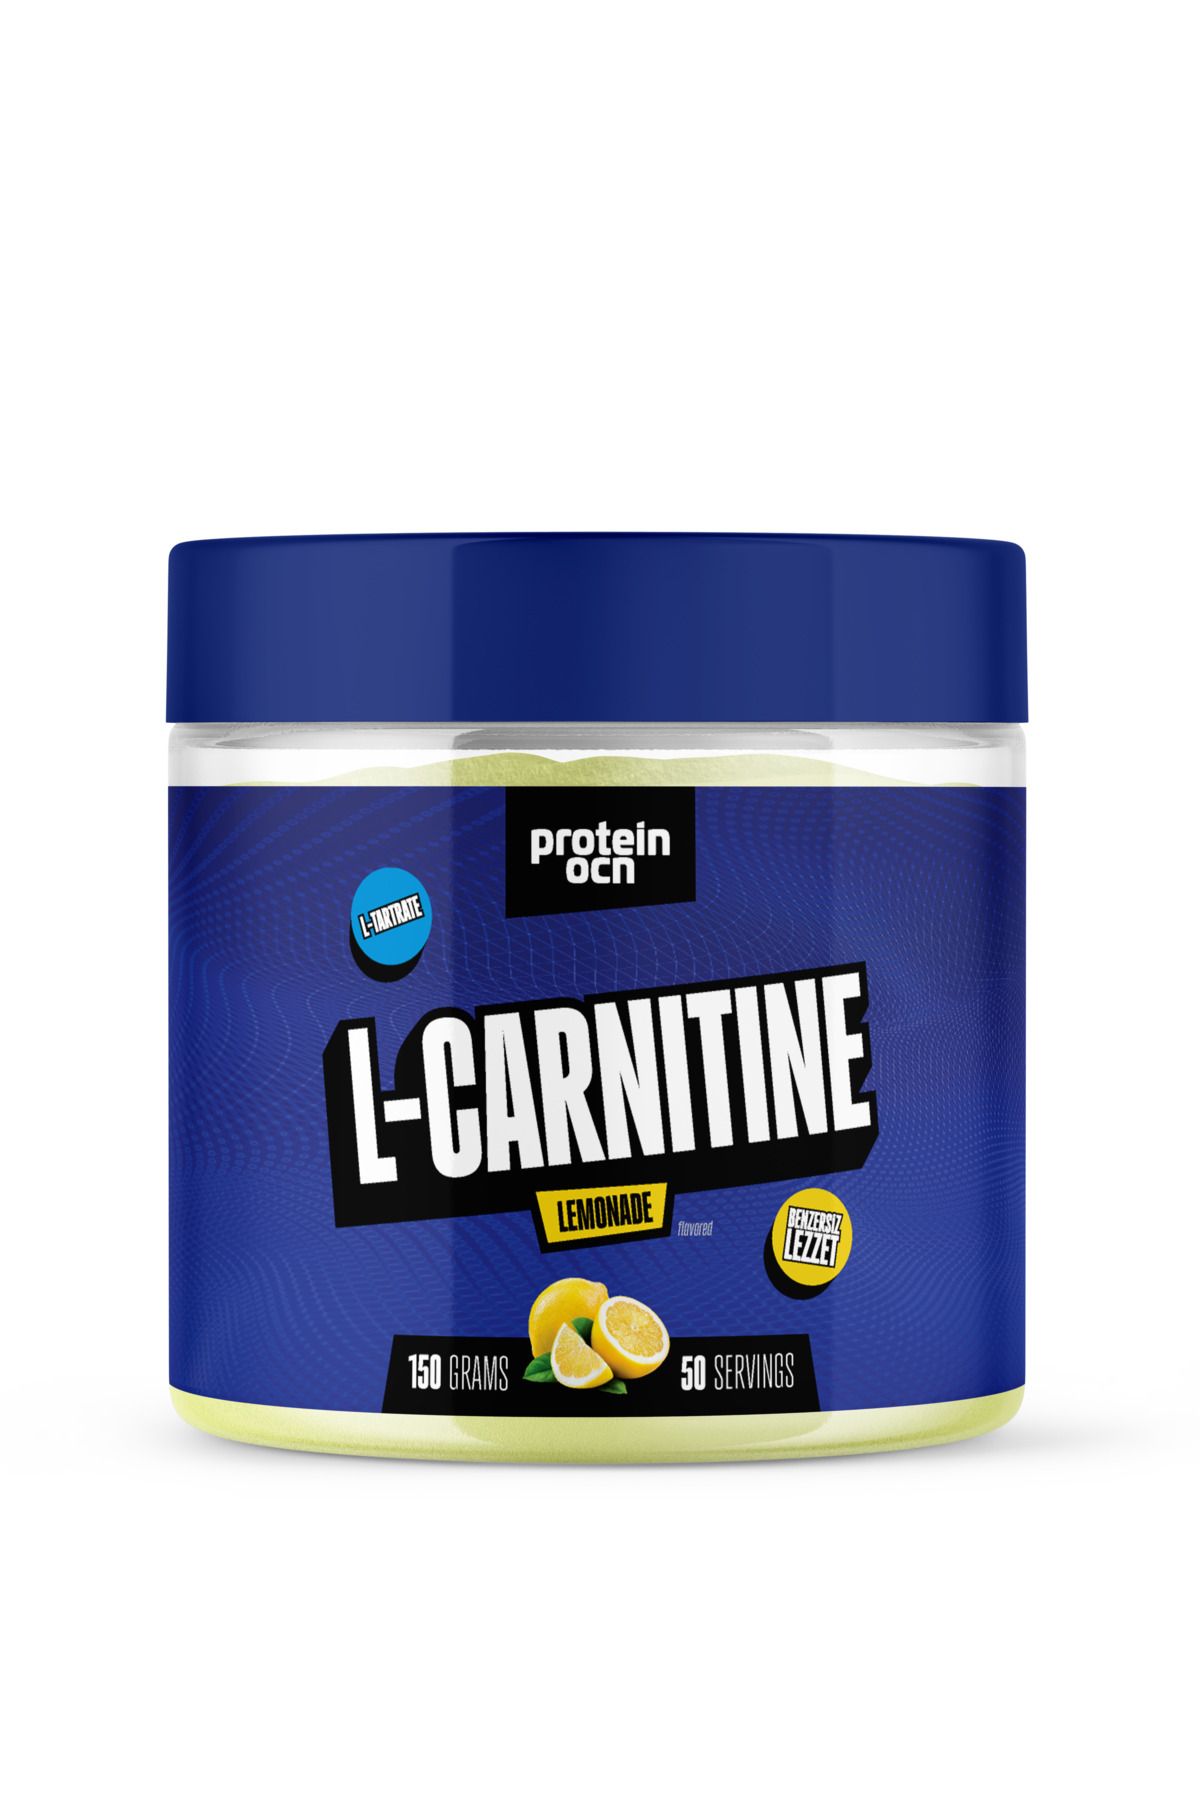 Proteinocean L-carnitine Limonata 150g - 50 Servis